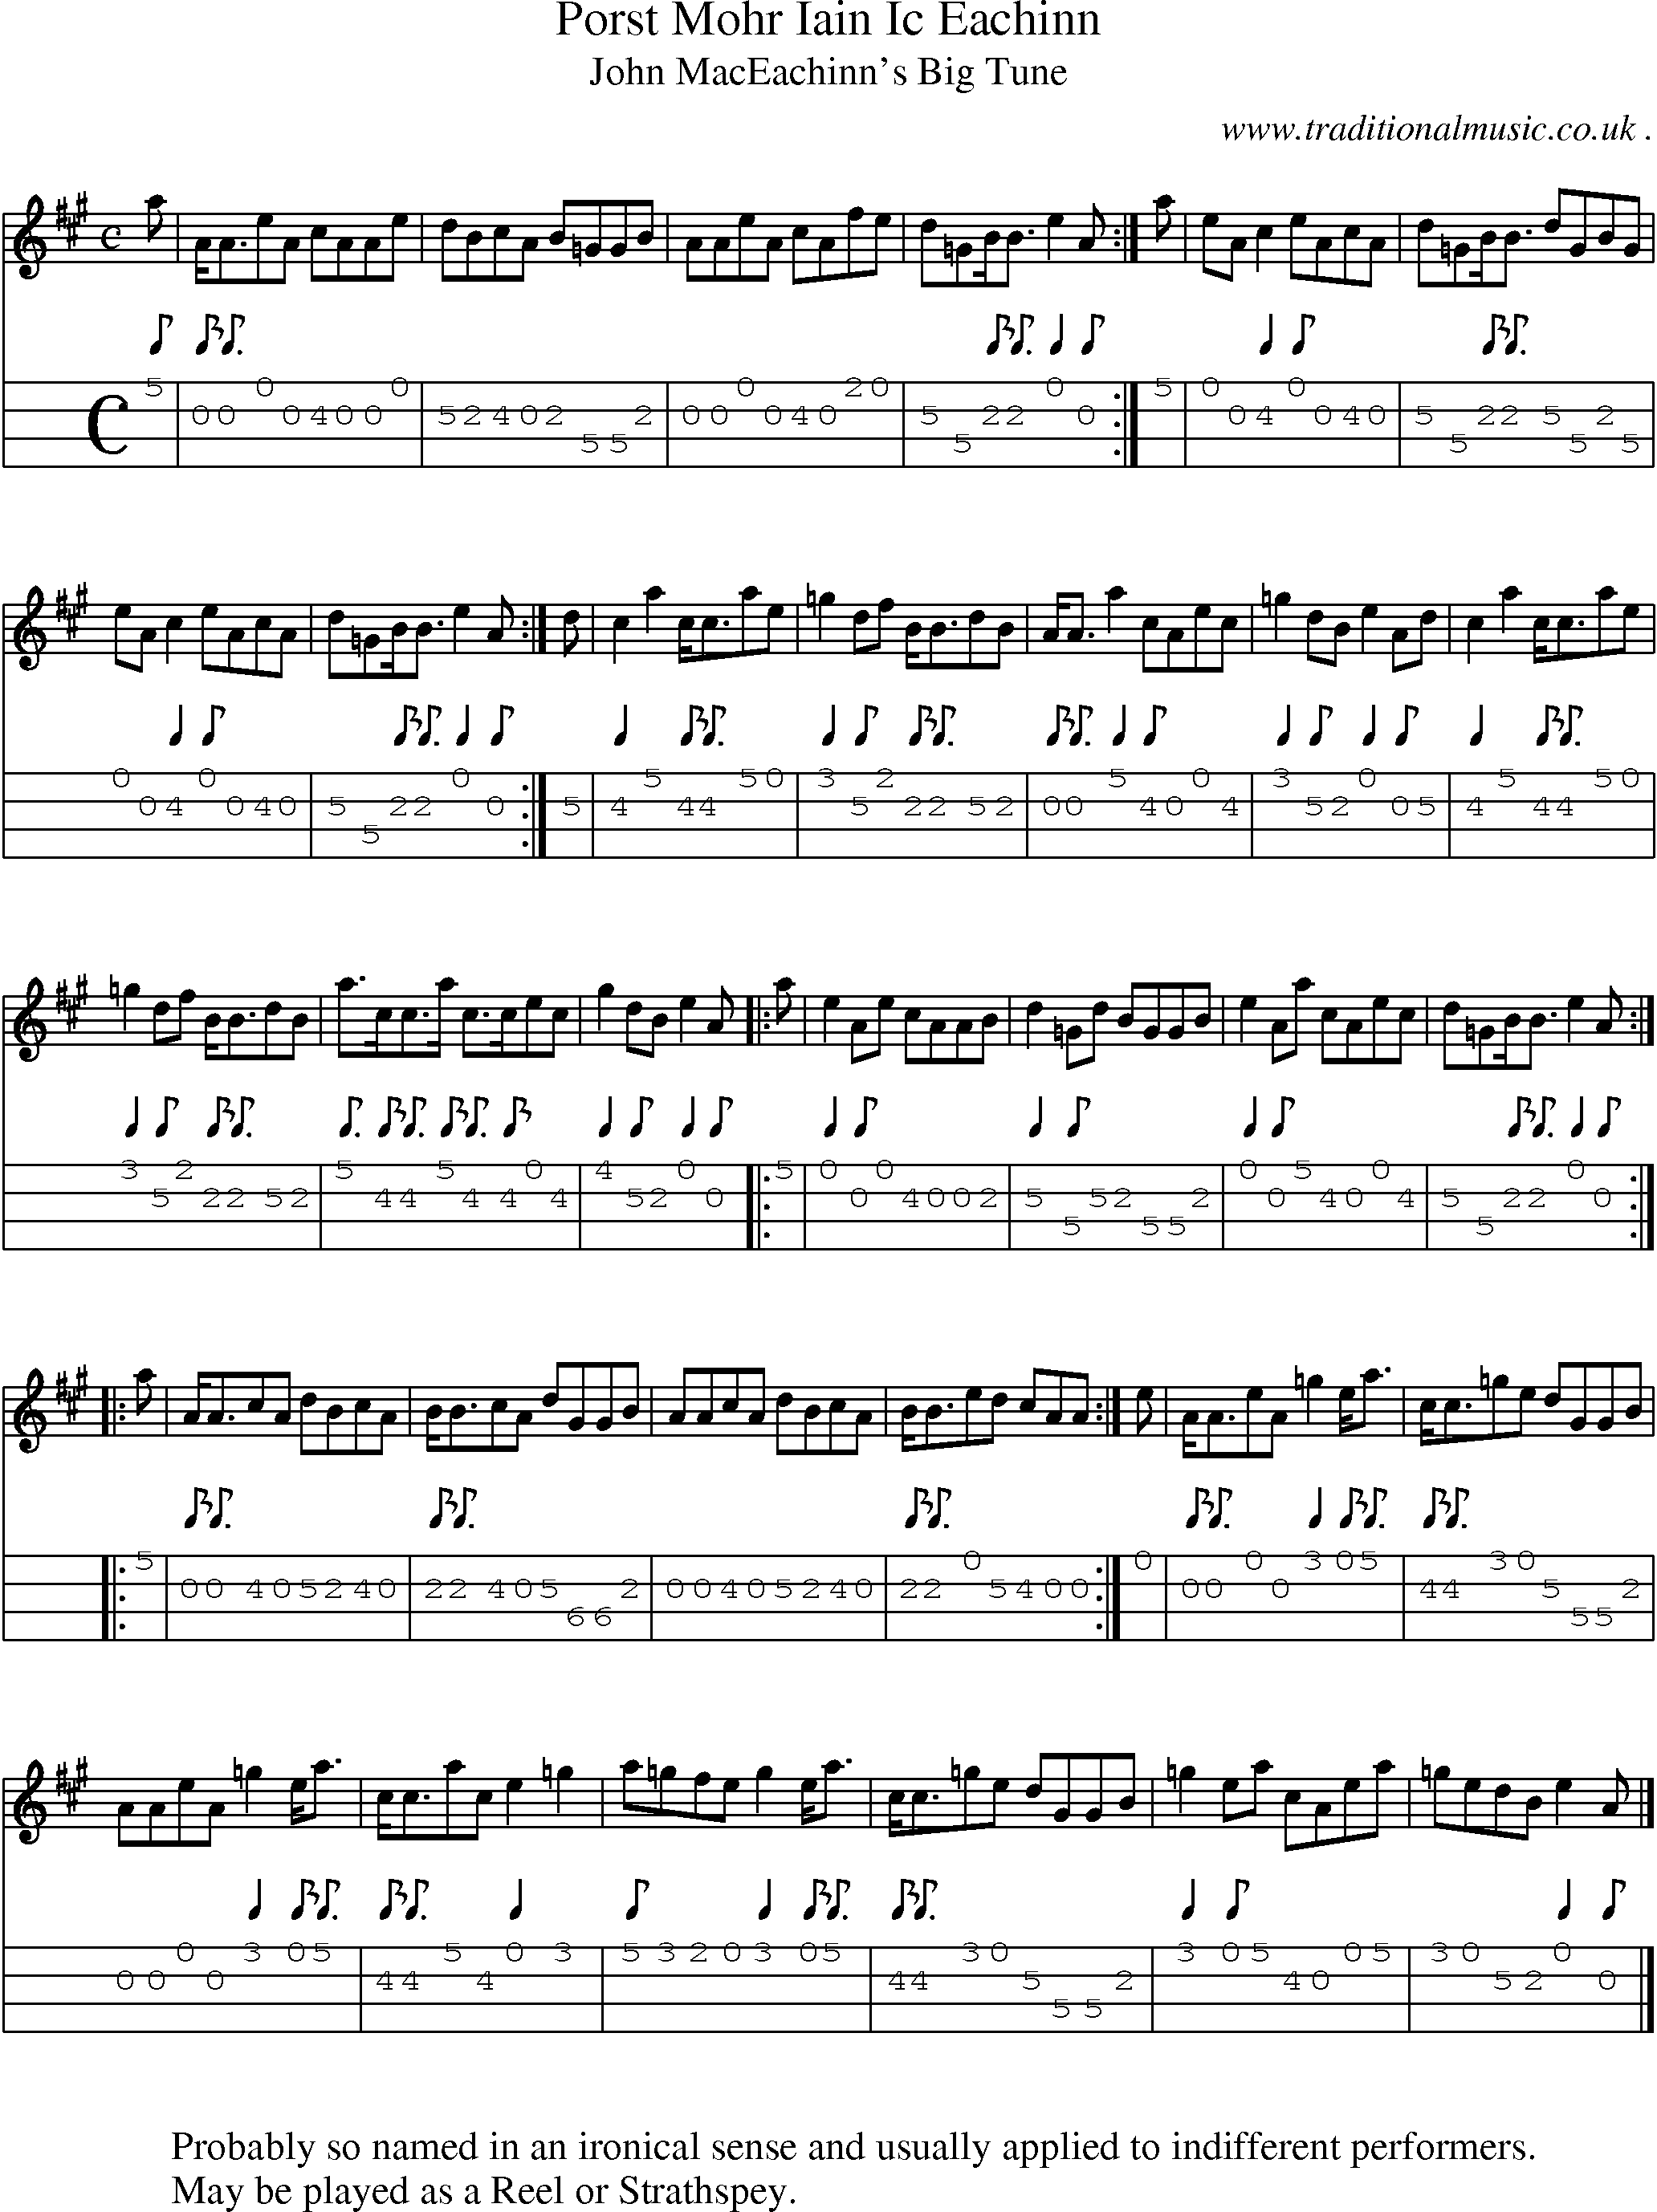 Sheet-music  score, Chords and Mandolin Tabs for Porst Mohr Iain Ic Eachinn